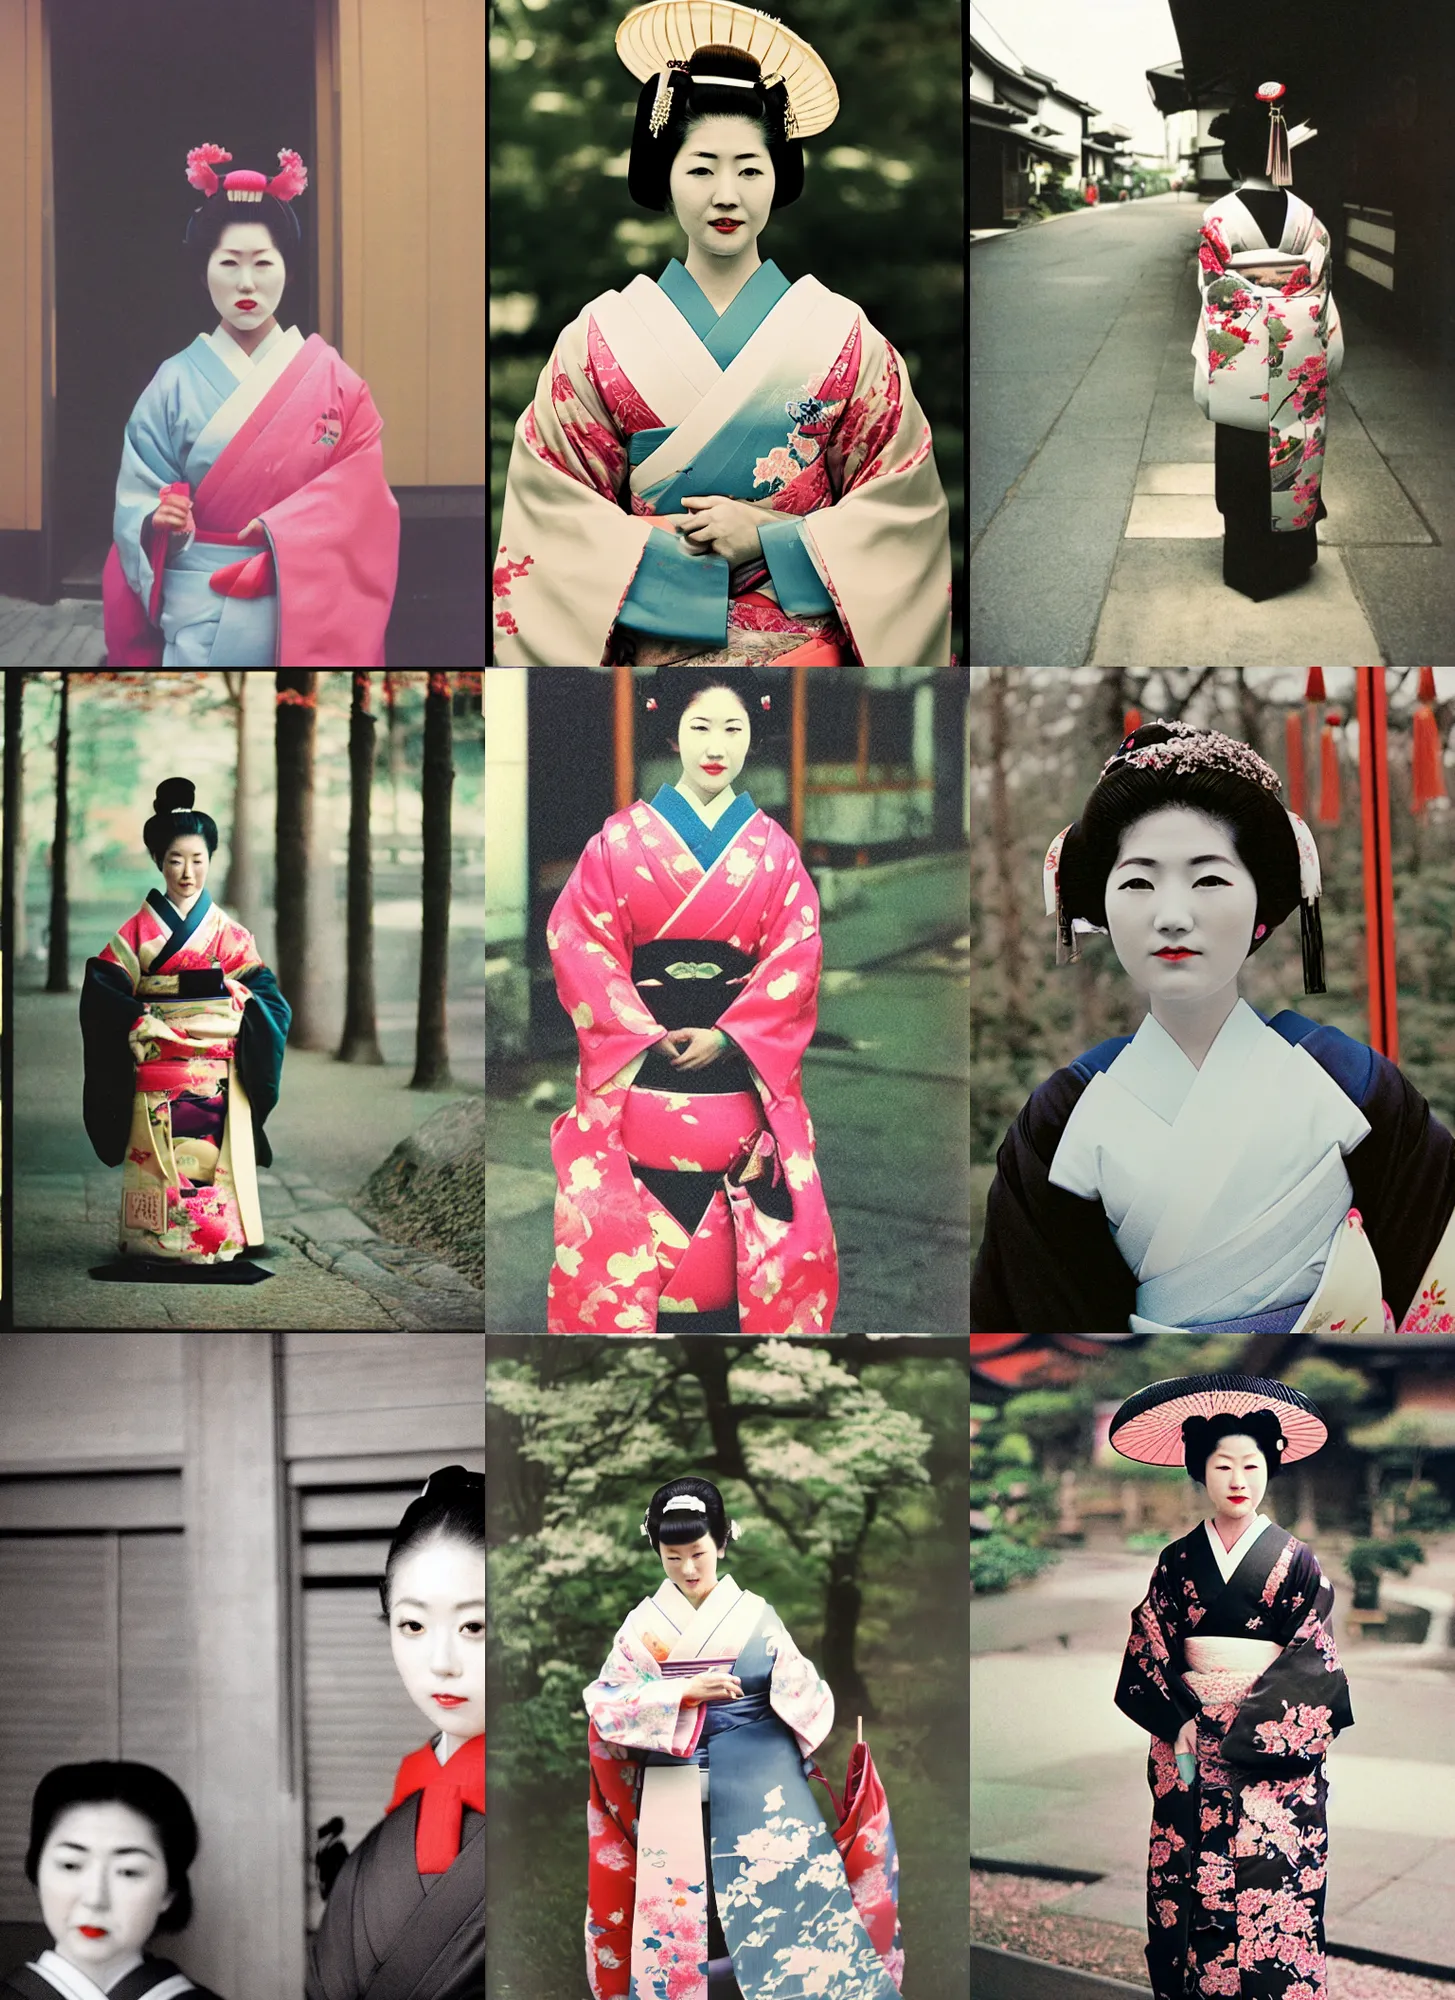 Prompt: Portrait Photograph of a Japanese Geisha Revolog Kolor 400